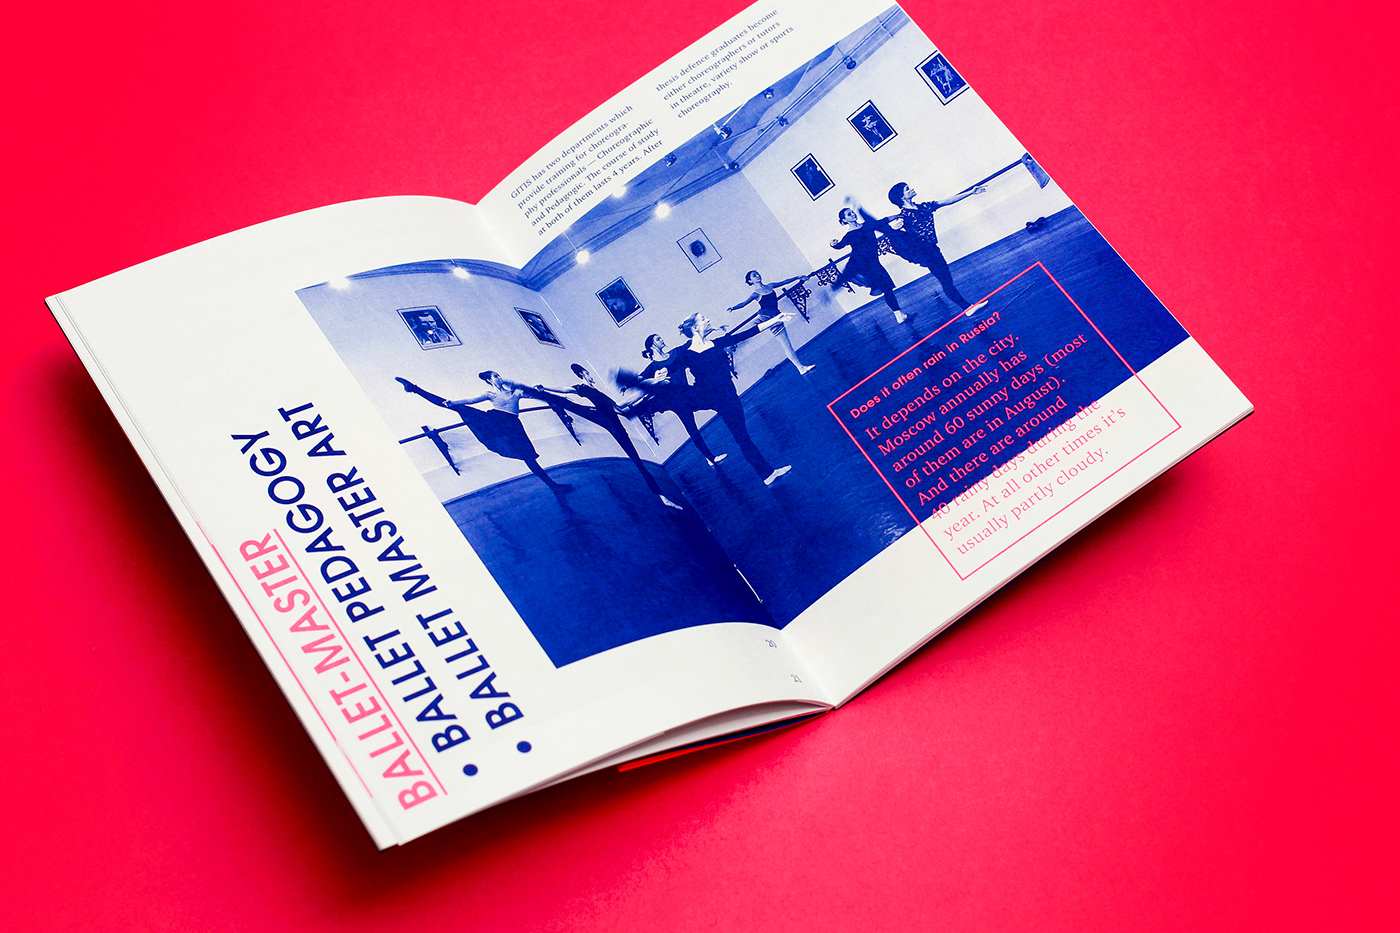 design graphic design  brochure Booklet GITIS Layout institute theater  Open Spine Binding neon